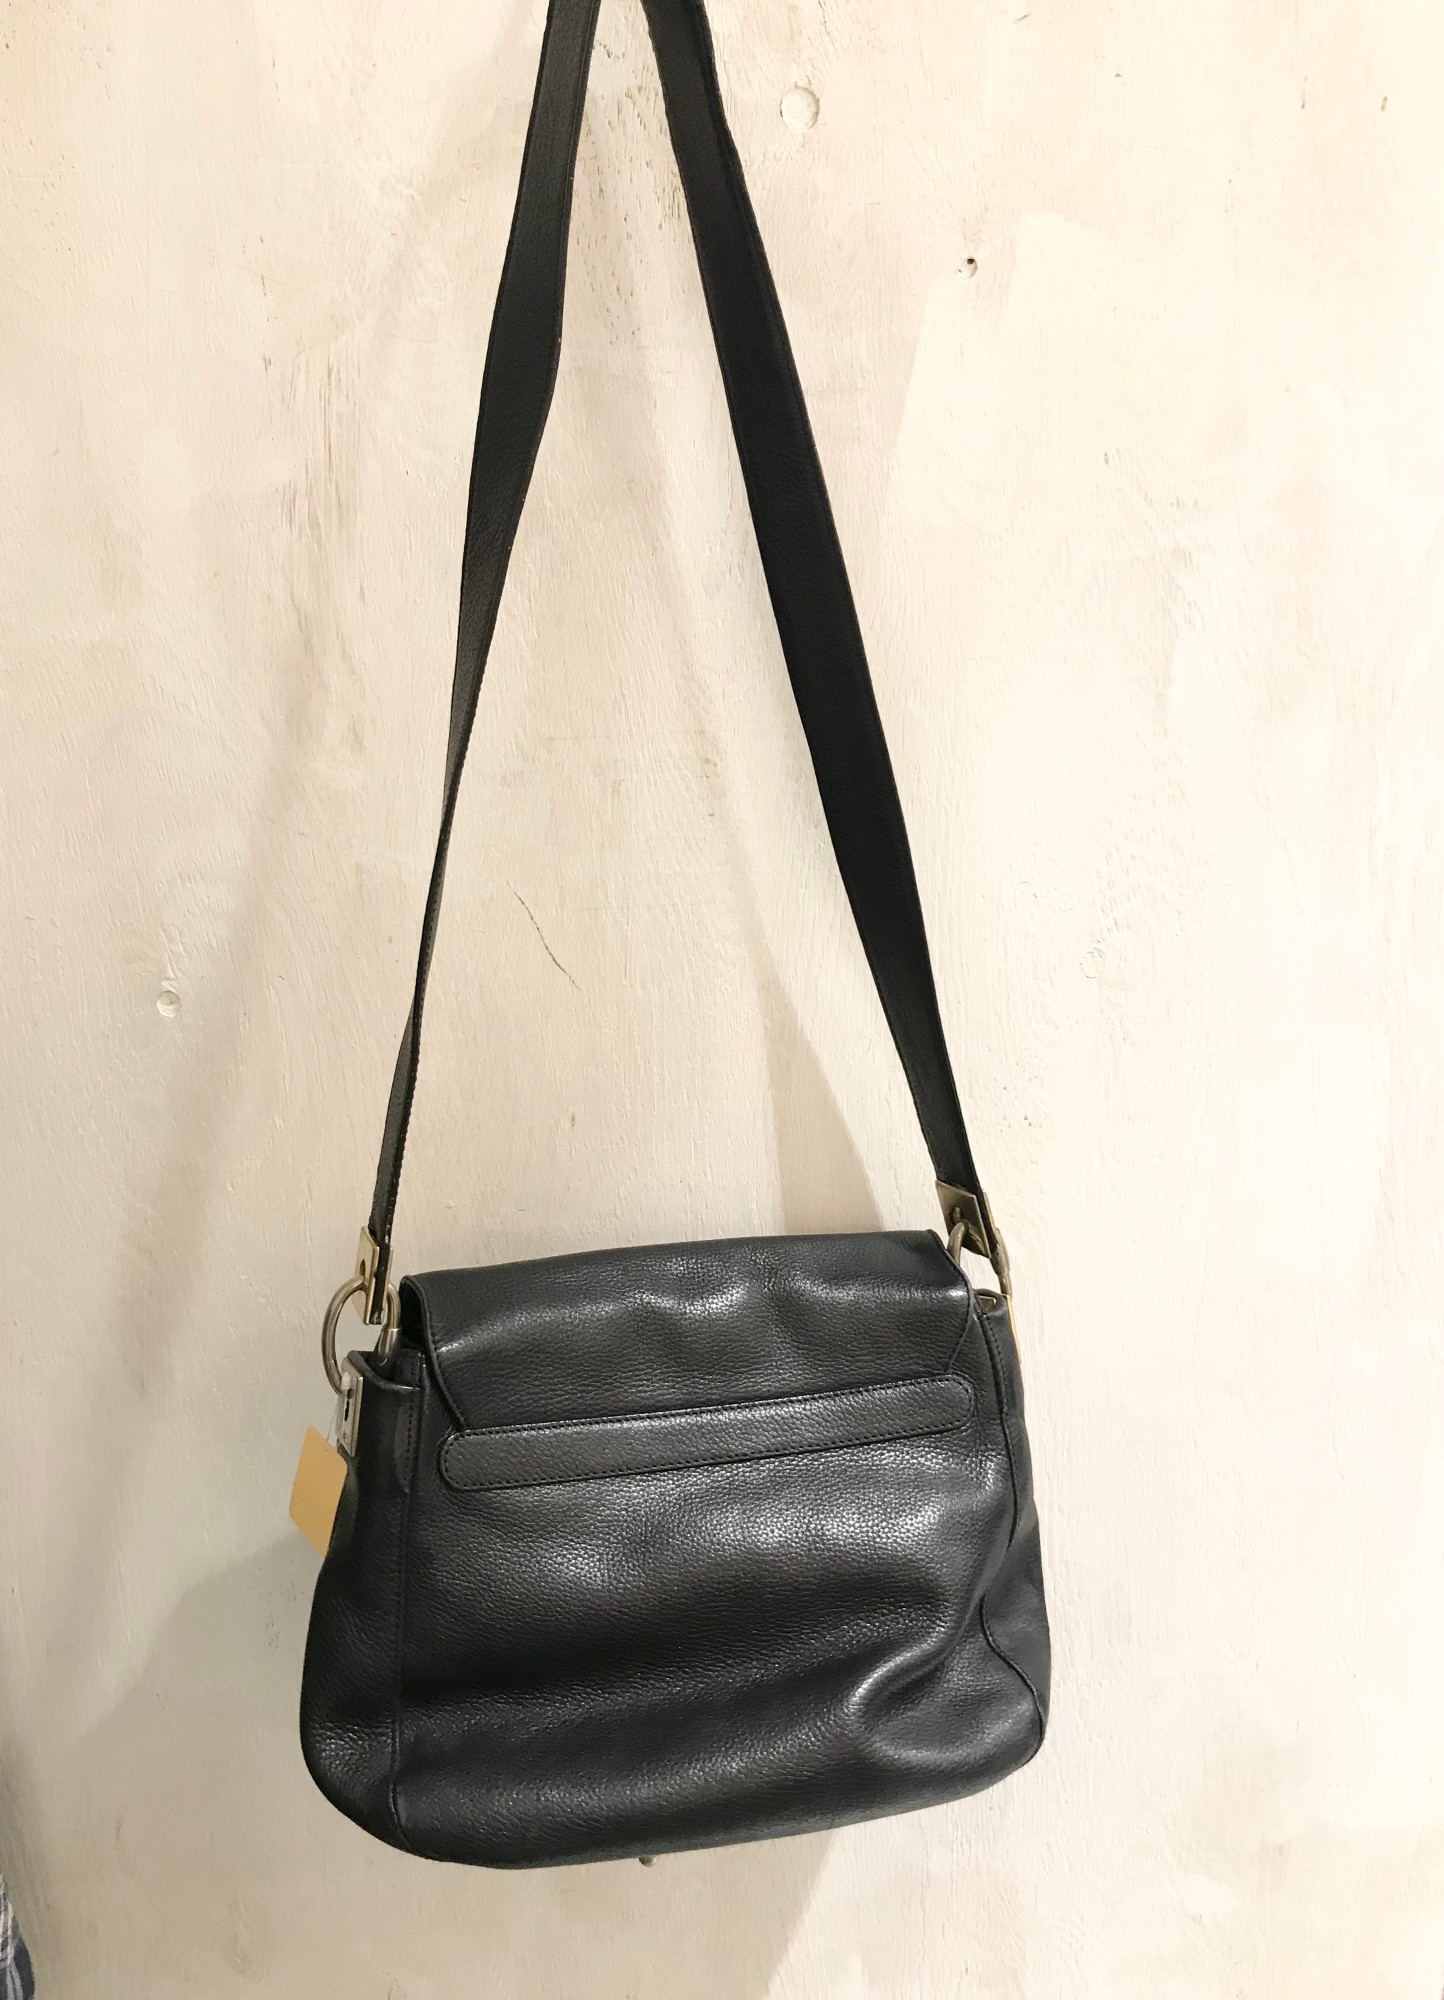 ungaro / shoulder bag / black / ウンガロ / シ